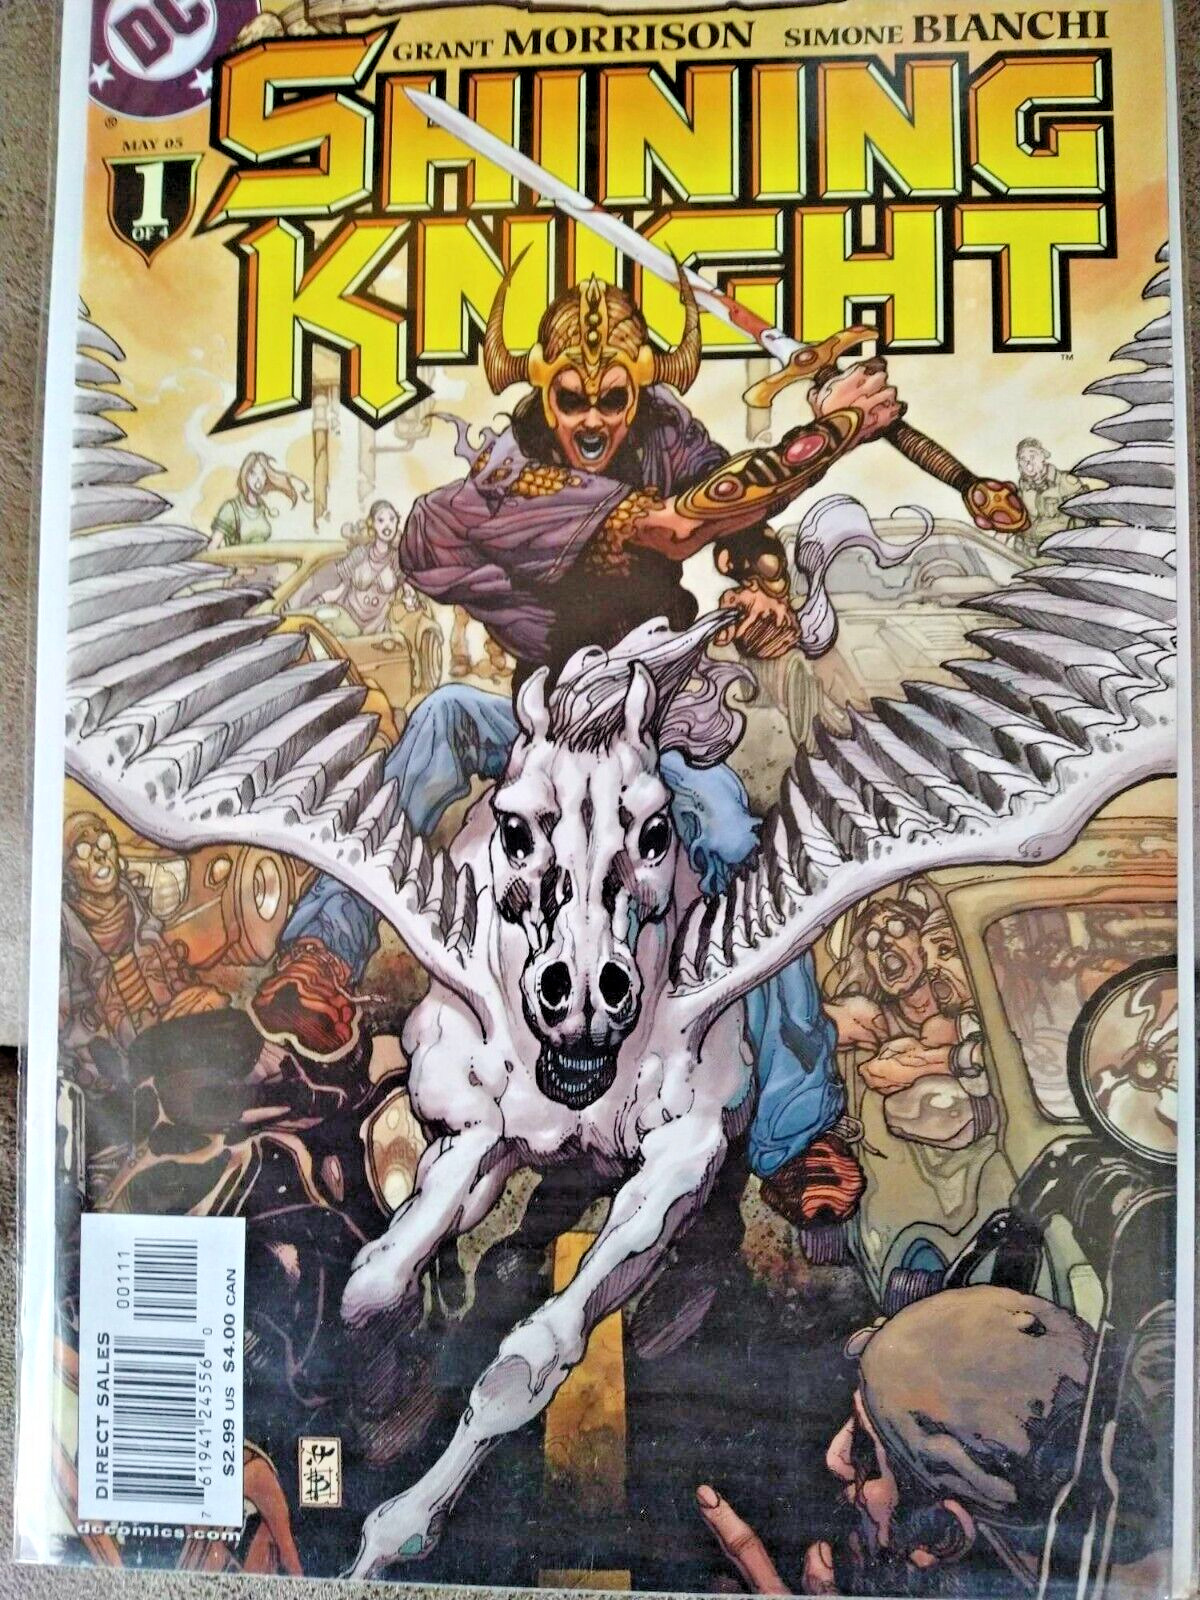 Seven Soldiers Shining Knight #1-4 Mini series Grant Morrison DC Comics